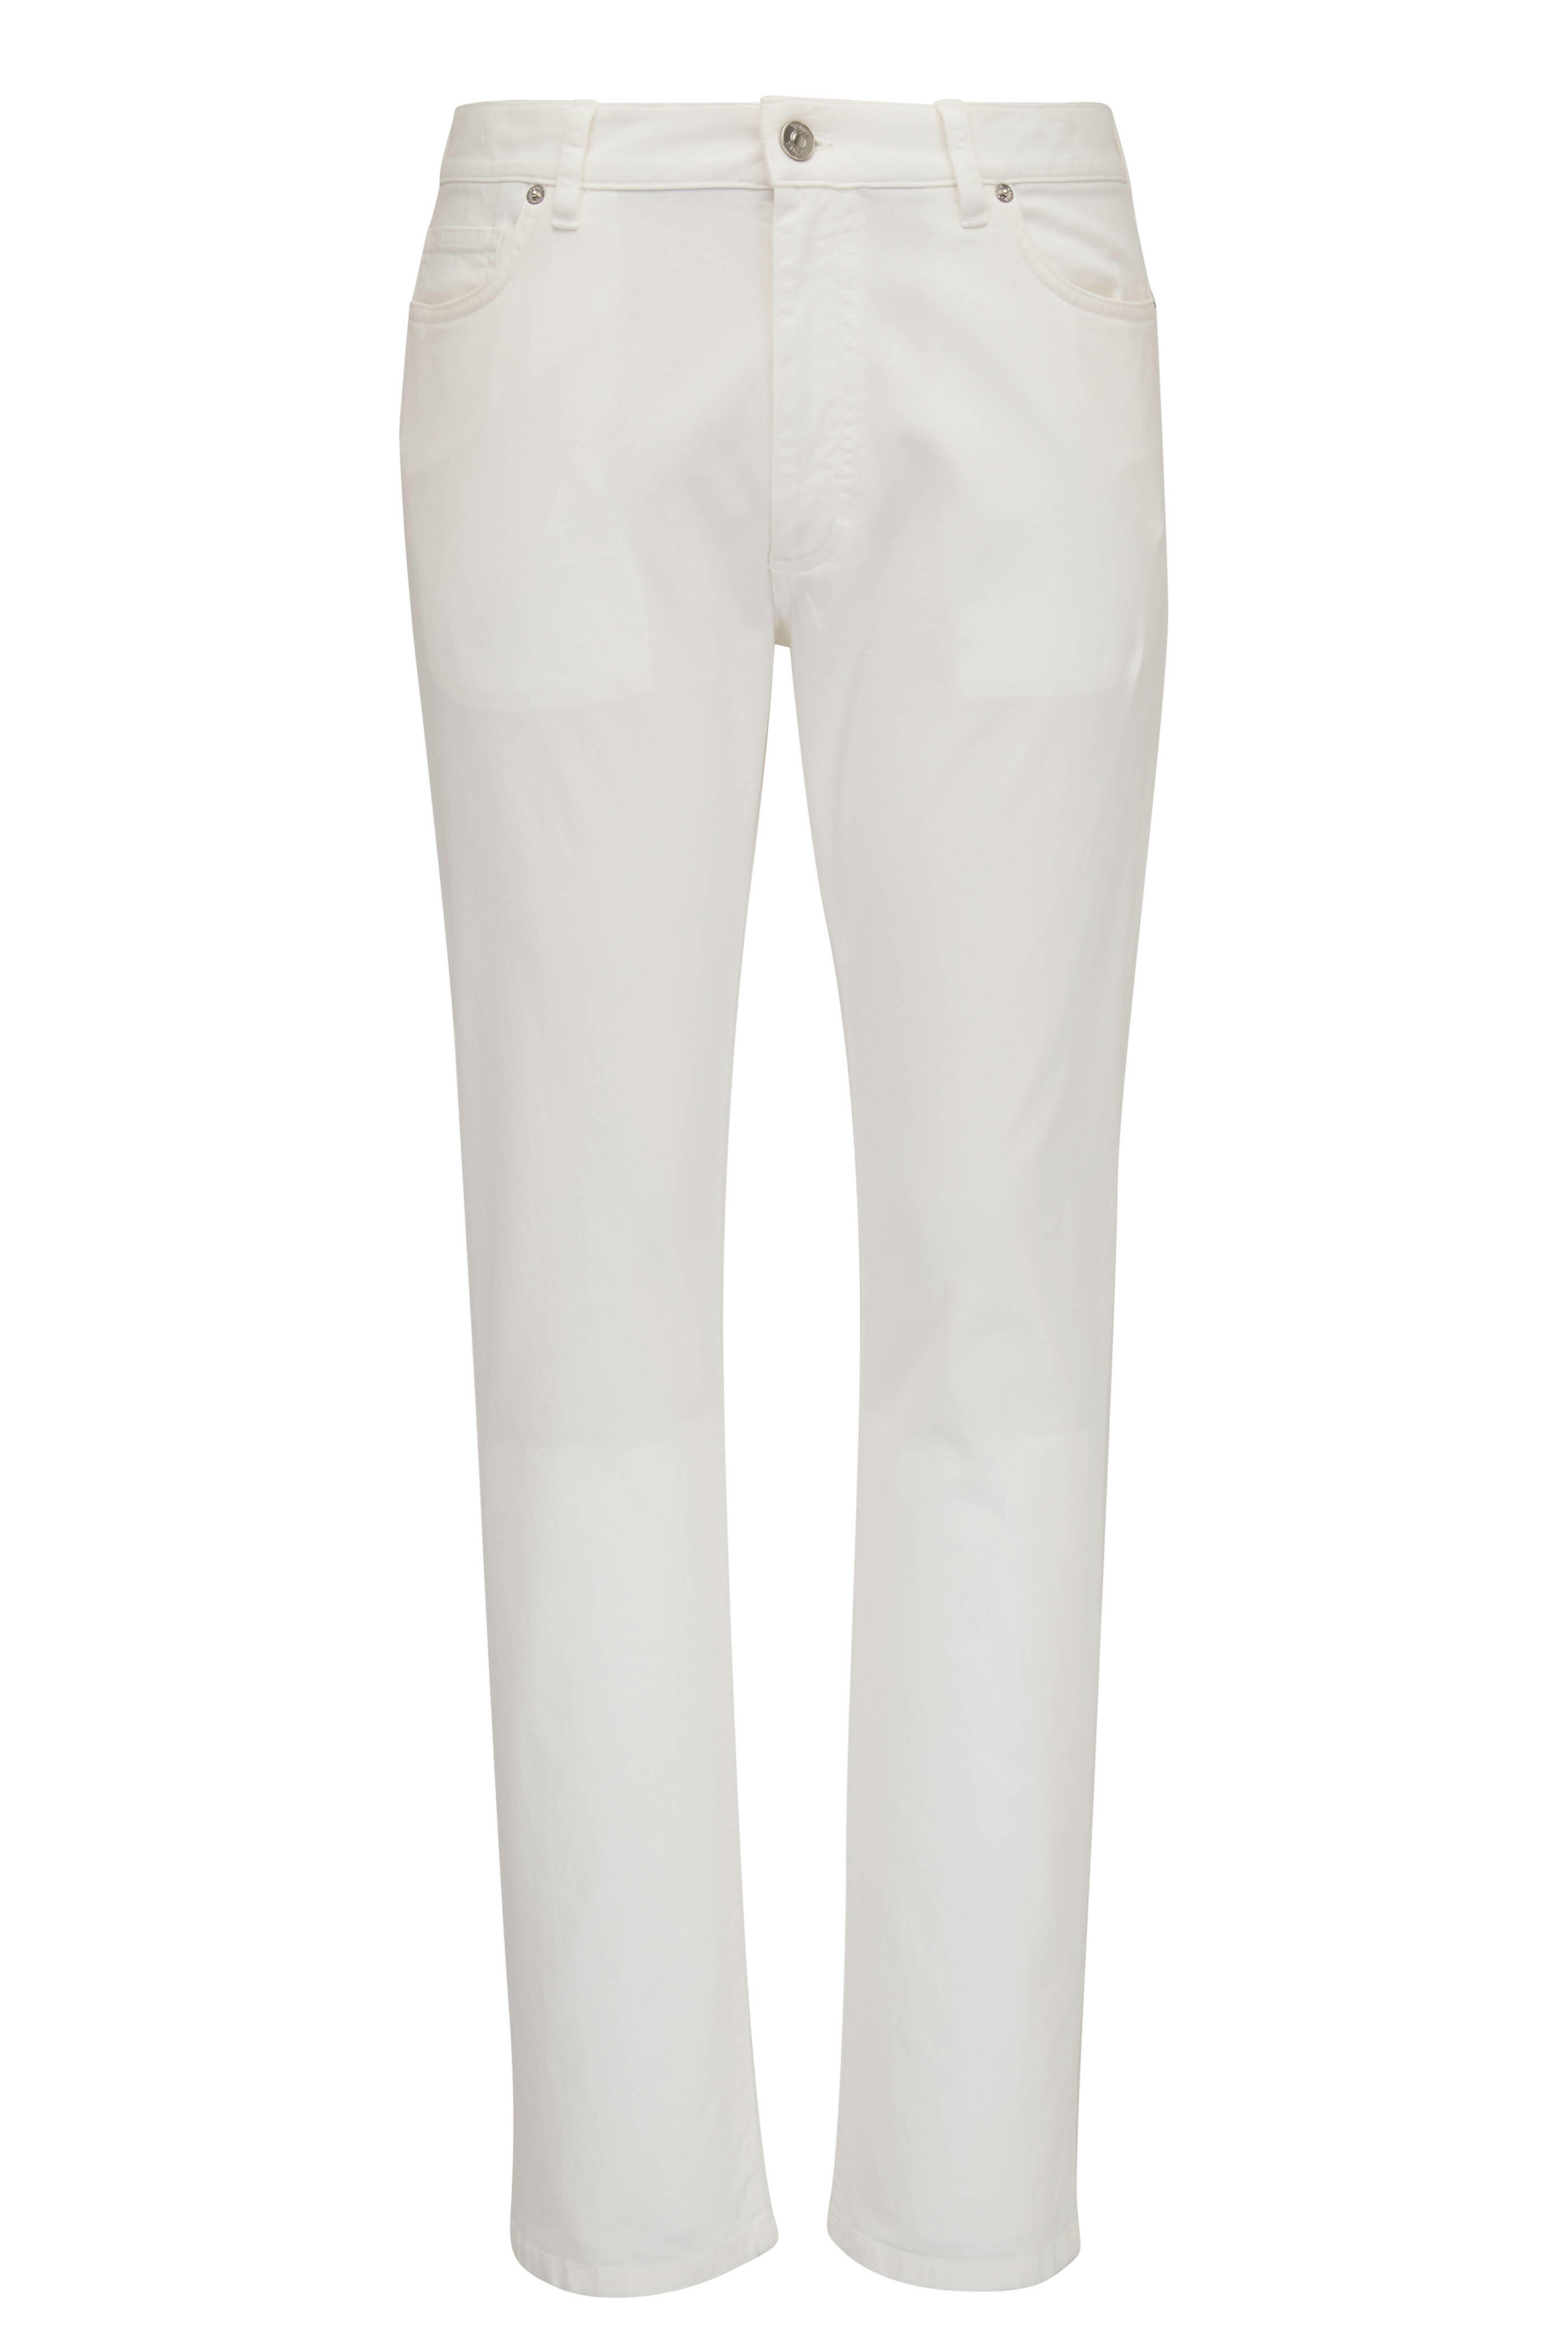 Zegna - City White Stretch Cotton Five Pocket Pant